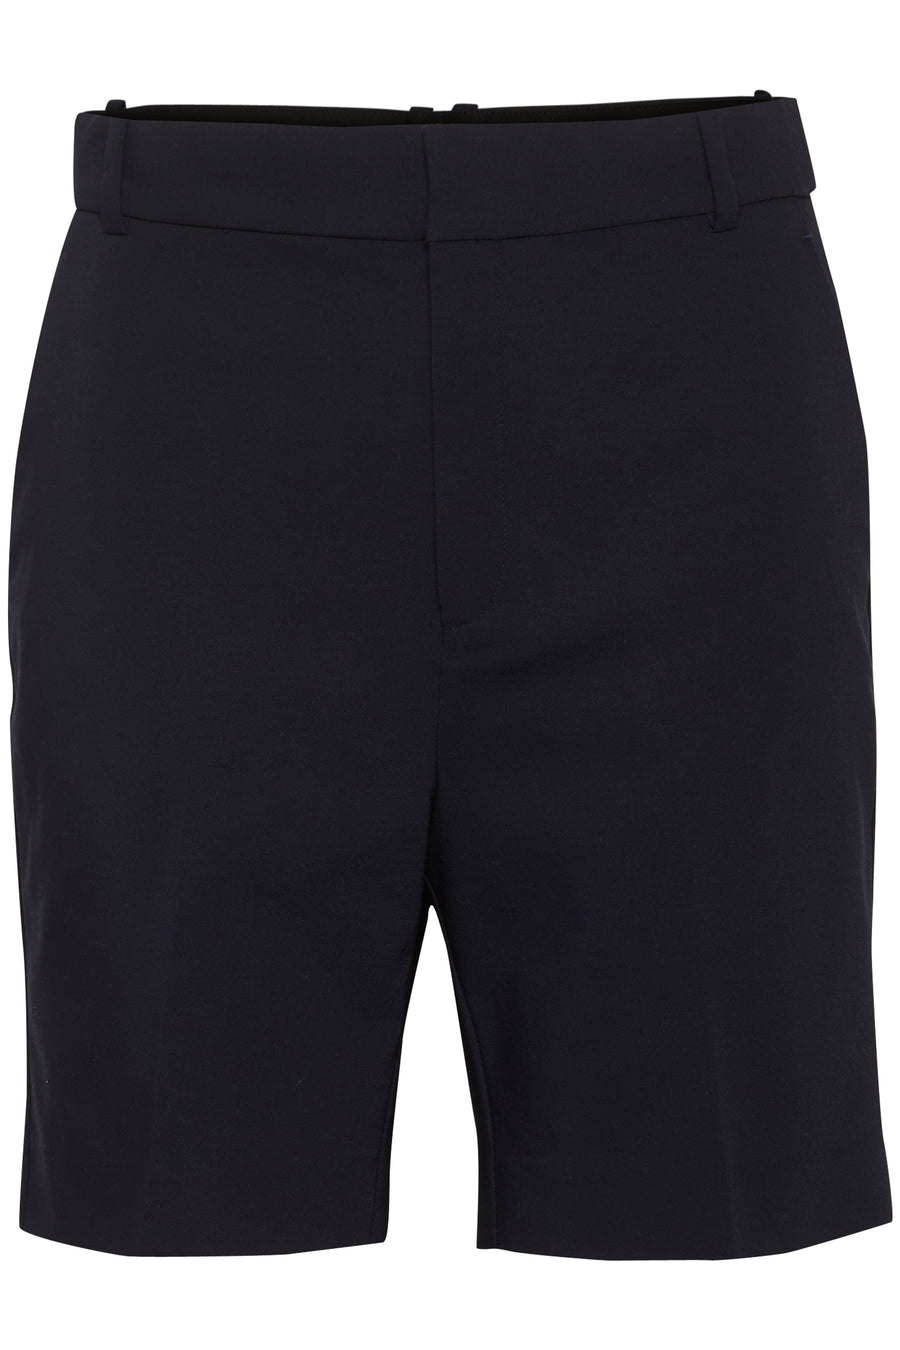 InWear Zella Classic Shorts - Black